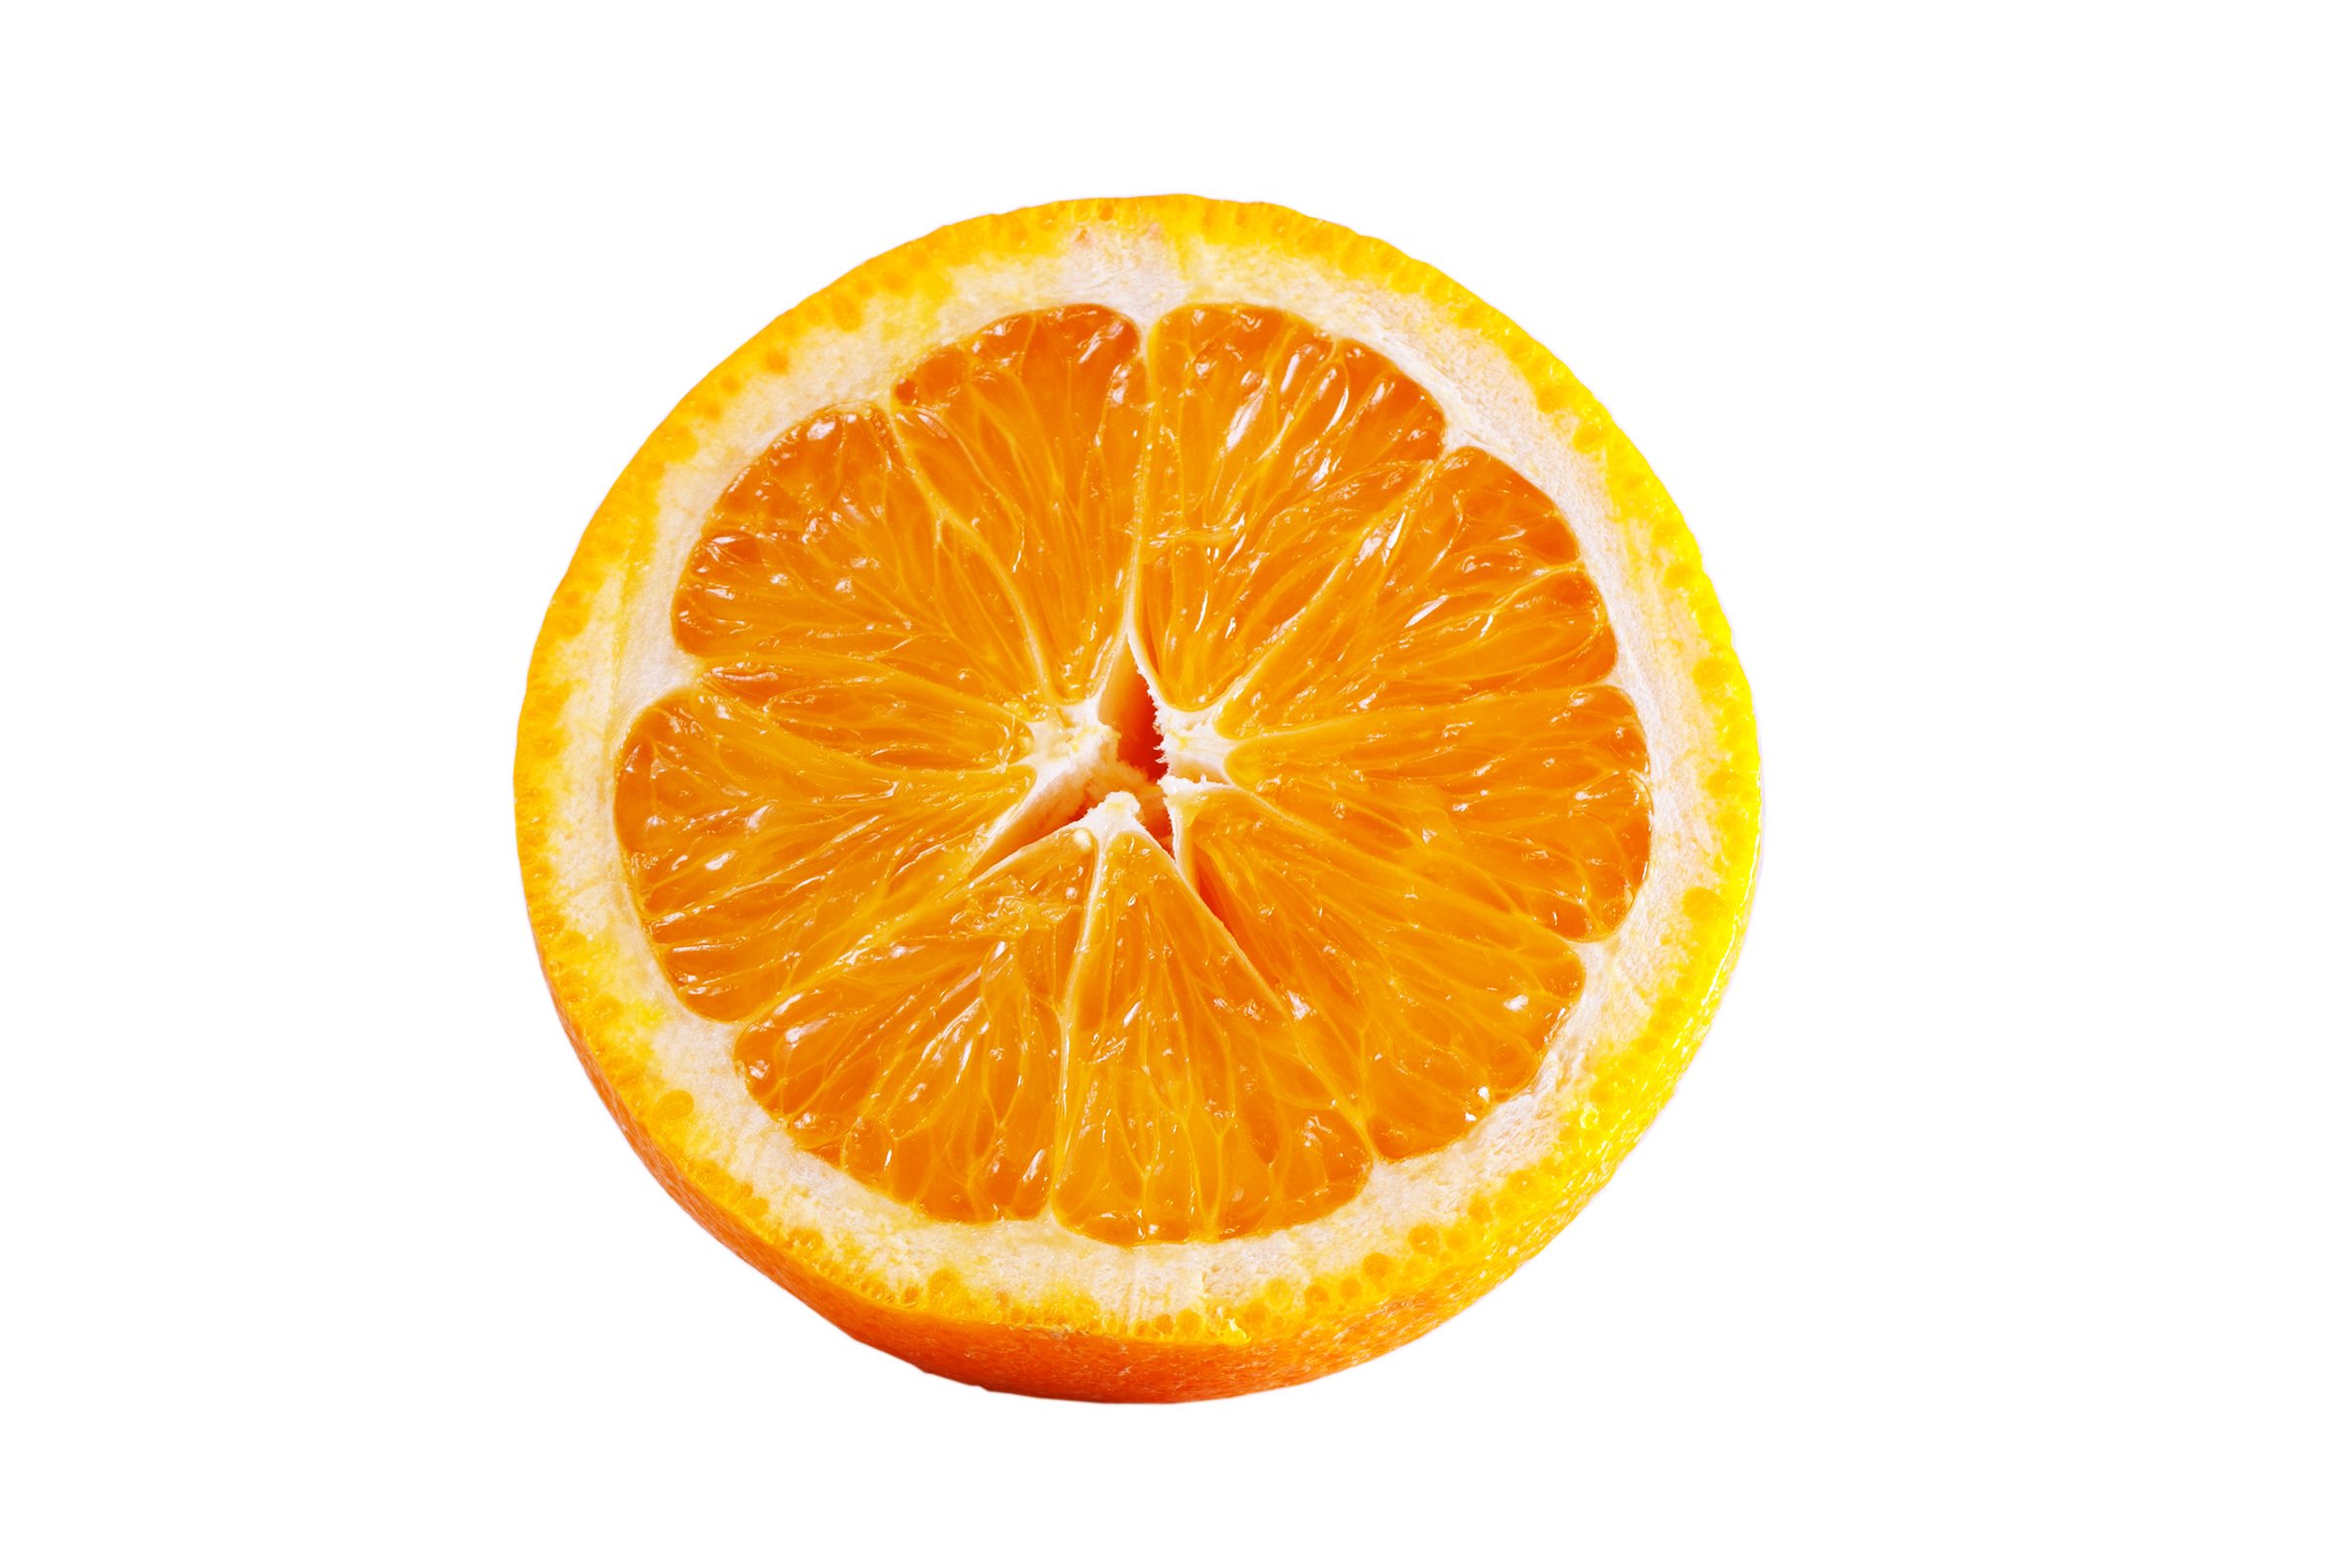 Orange vitamin. Апельсин. Апельсин без фона. Апельсин в разрезе. Слайс апельсина.